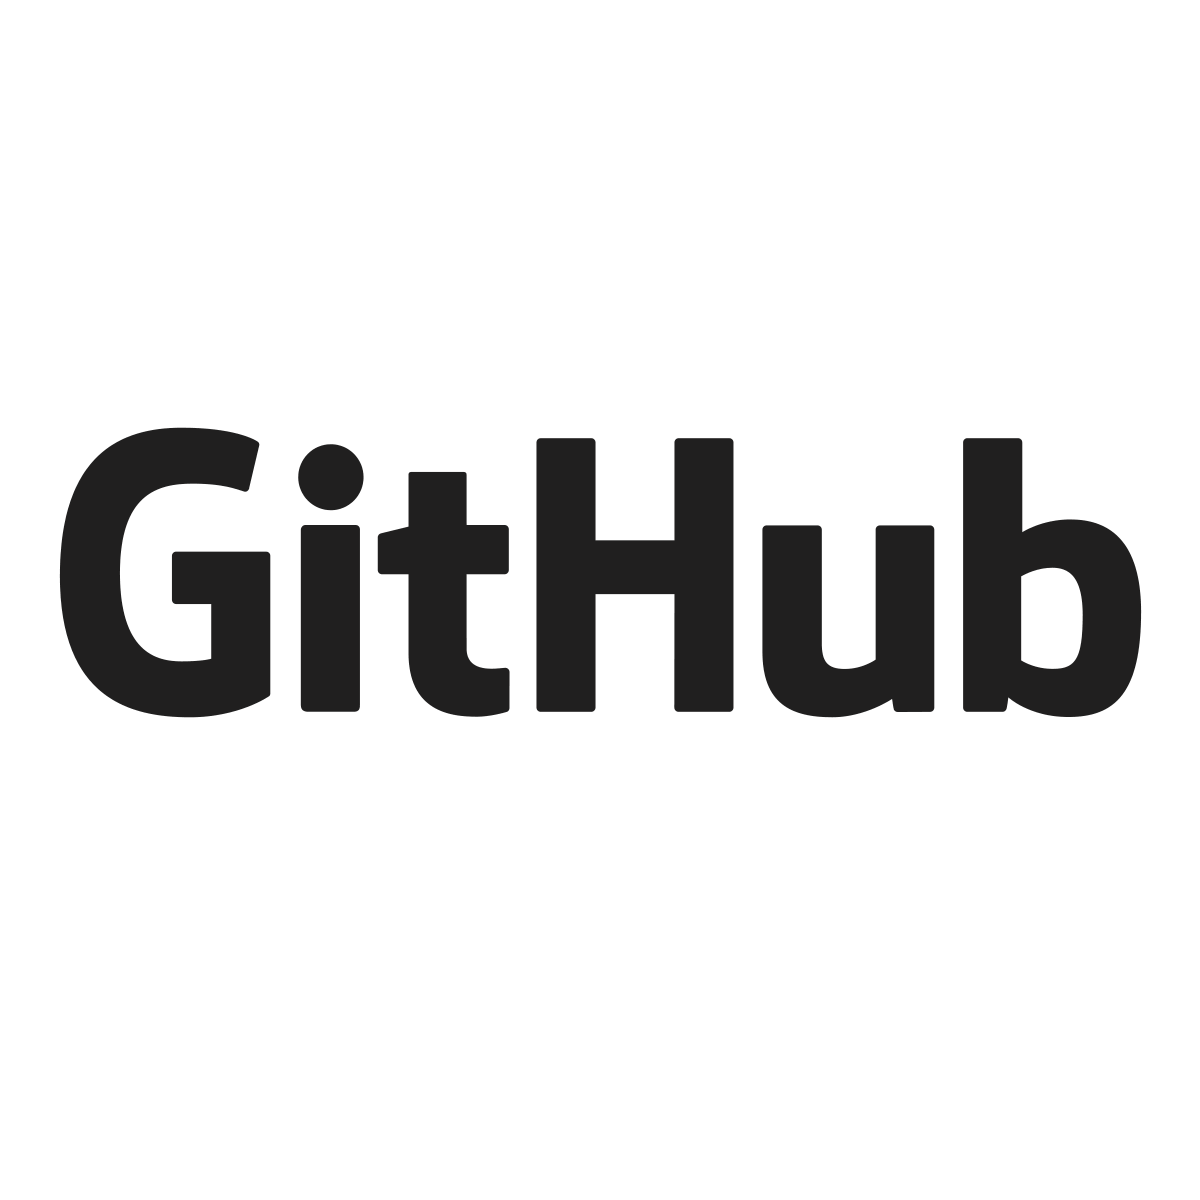 About commit signature verification - GitHub Docs